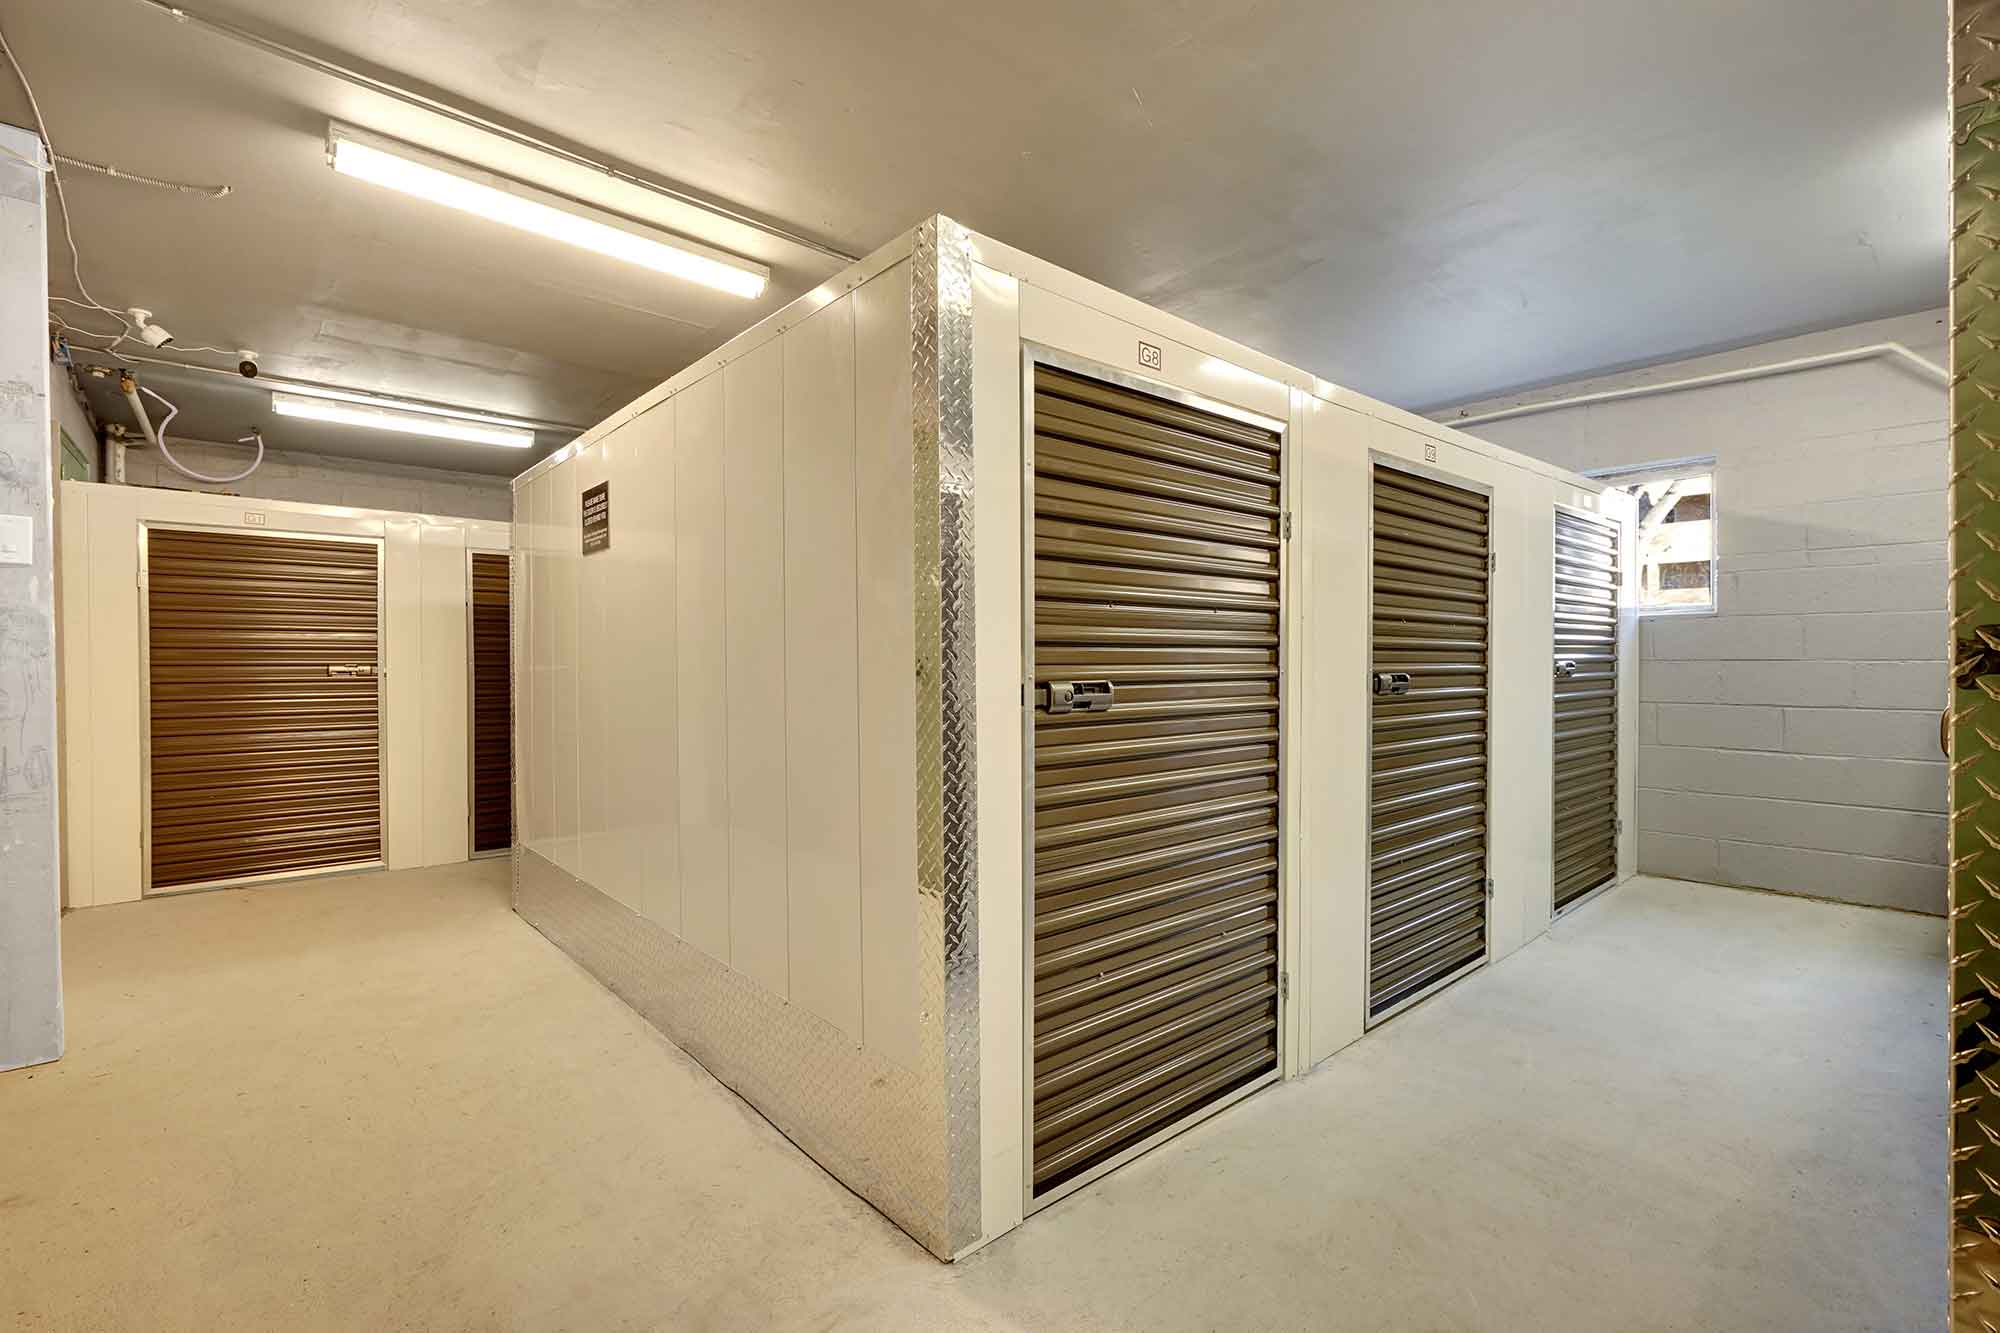 On Site Storage Units - Max Space Storage - Building Tenant Storage Lockers - self storage unit solutions